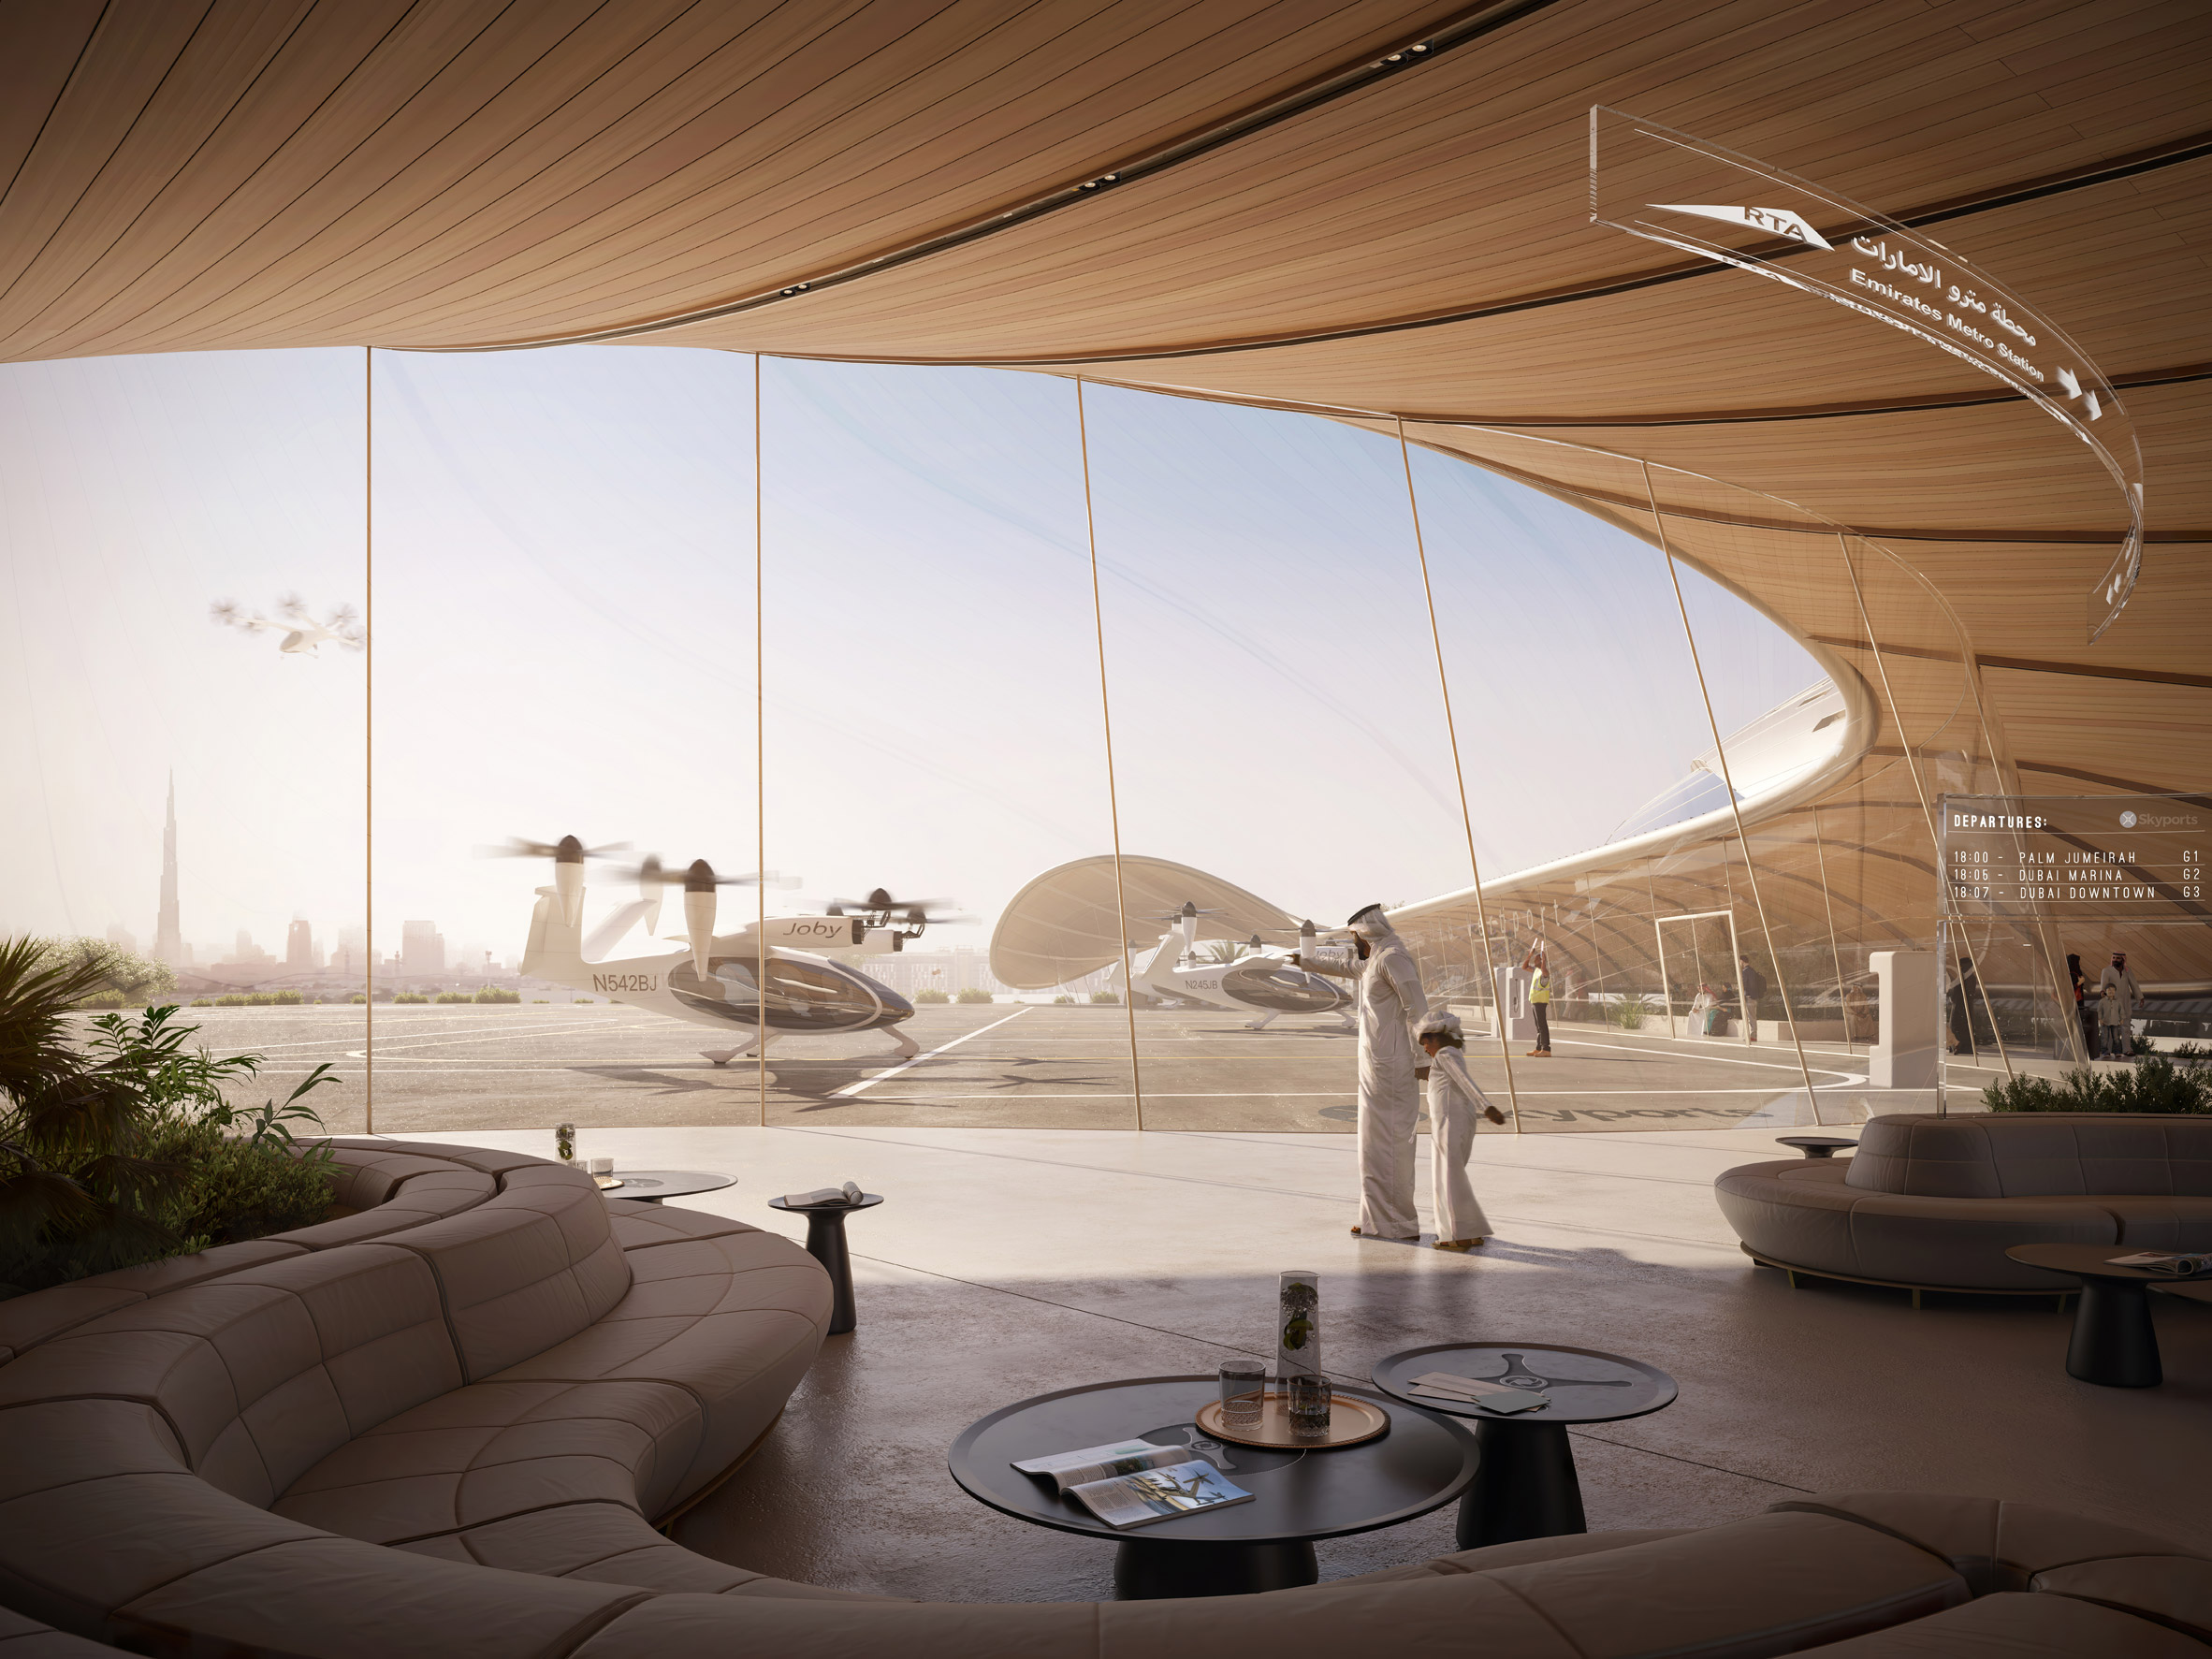 Interior render of the Dubai vertiport